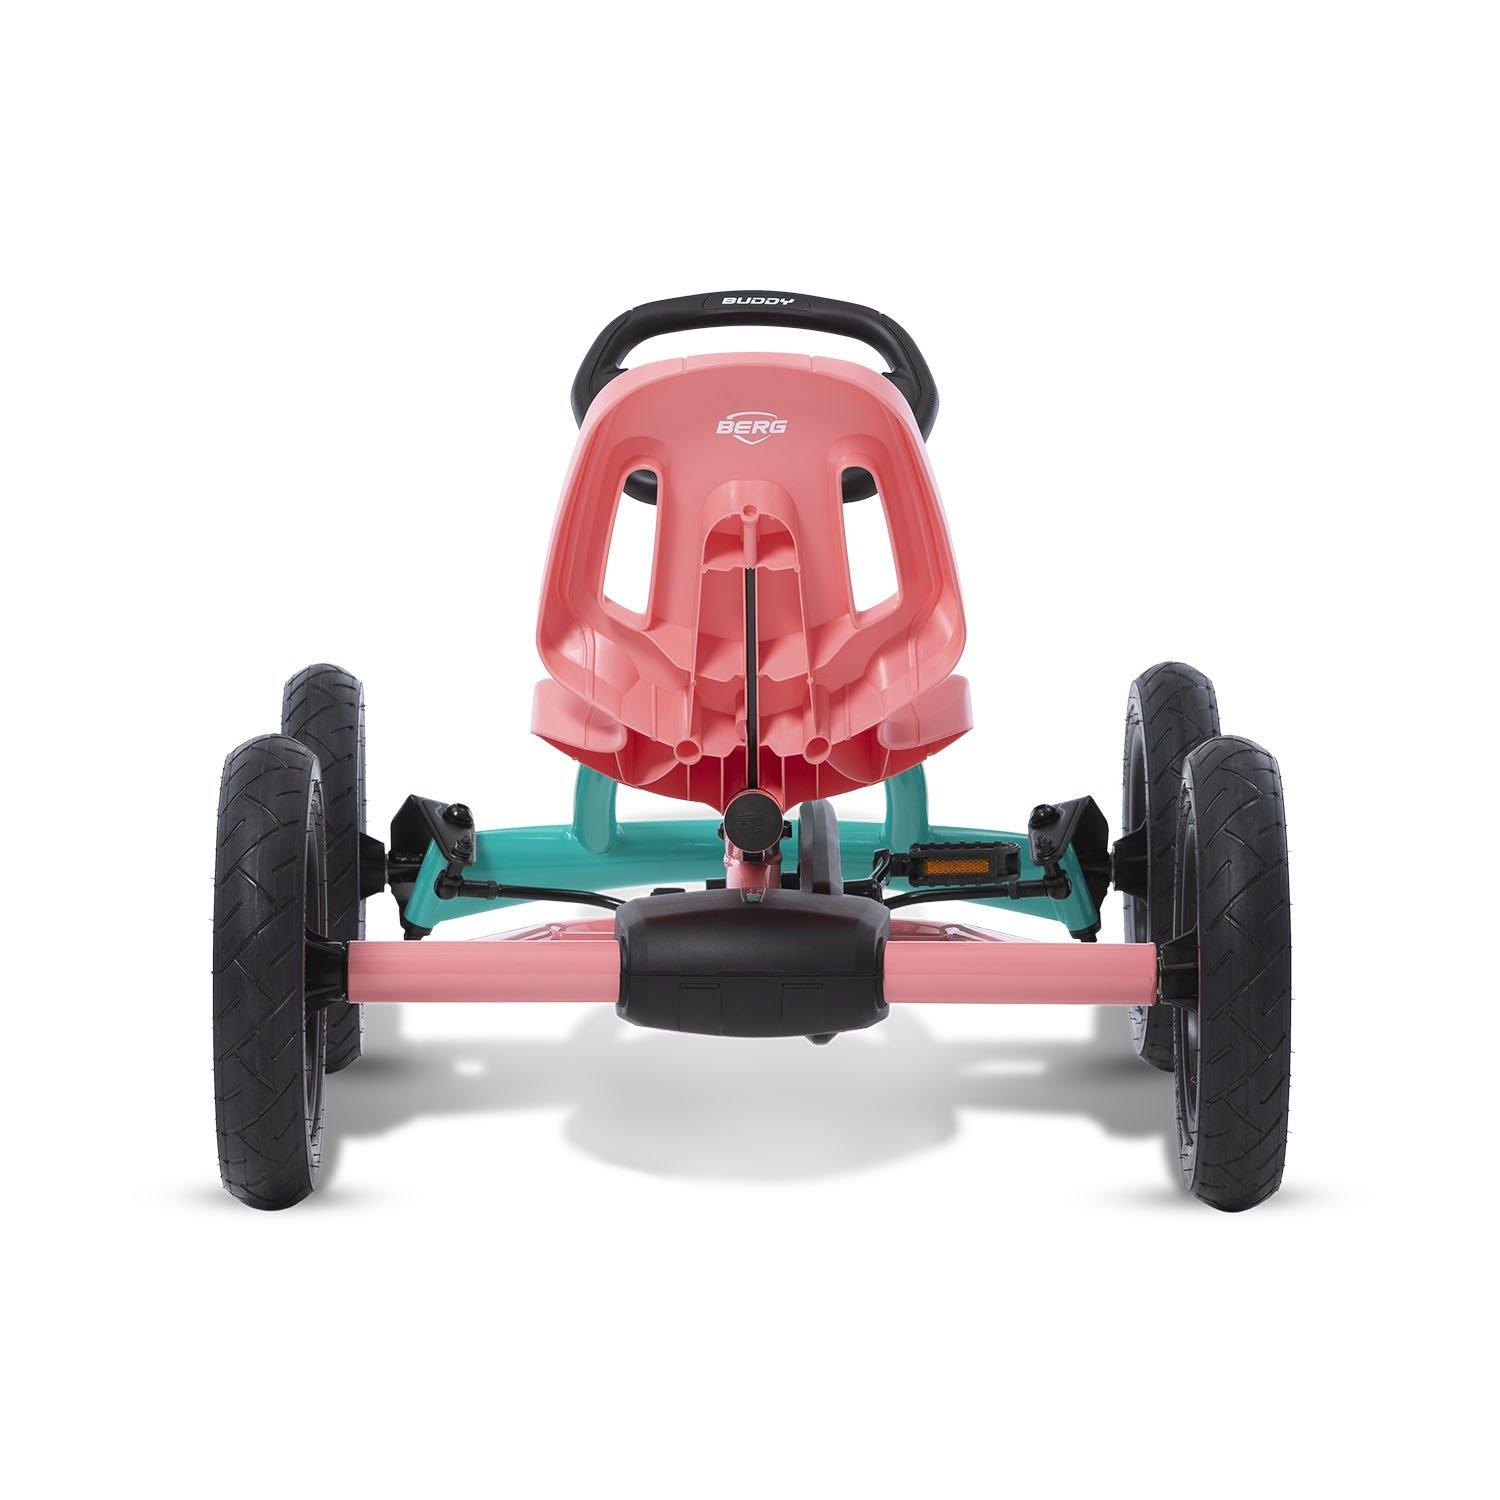  Berg Toys - Buddy Graphite Pedal Go Kart - Go Kart - Go Cart  for Kids - Pedal Car Outdoor Toys for Children Ages 3-8 - Ride On-Toy - BFR  System 